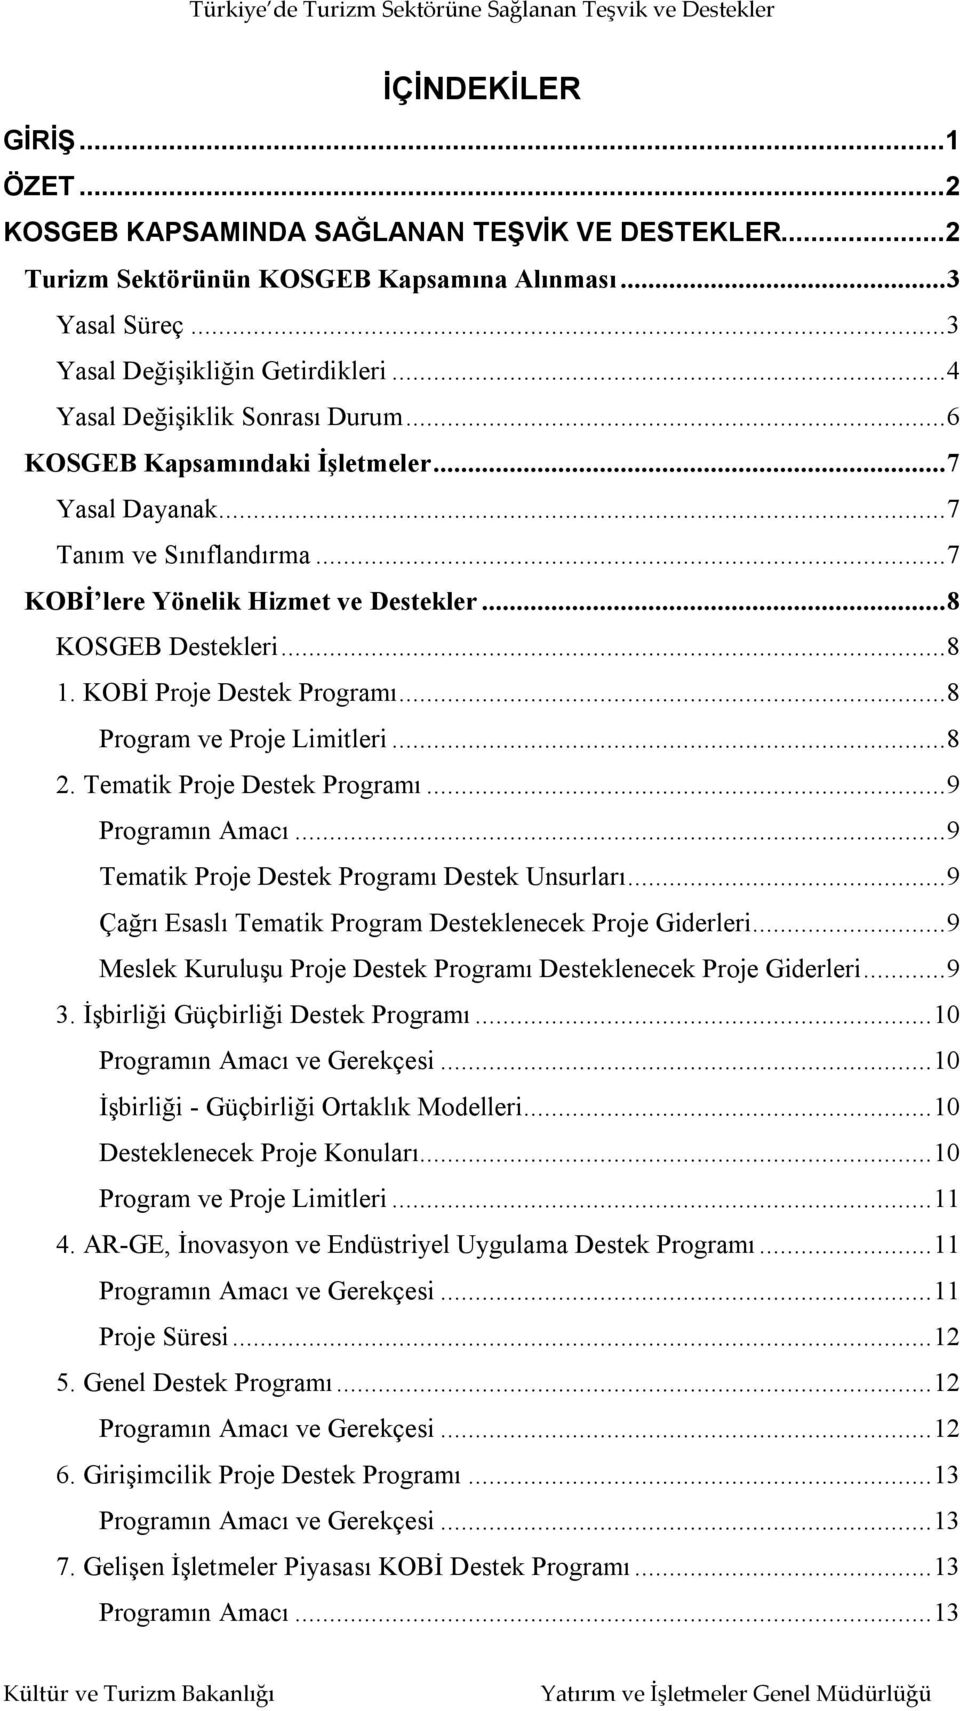 KOBİ Proje Destek Programı...8 Program ve Proje Limitleri...8 2. Tematik Proje Destek Programı...9 Programın Amacı...9 Tematik Proje Destek Programı Destek Unsurları.